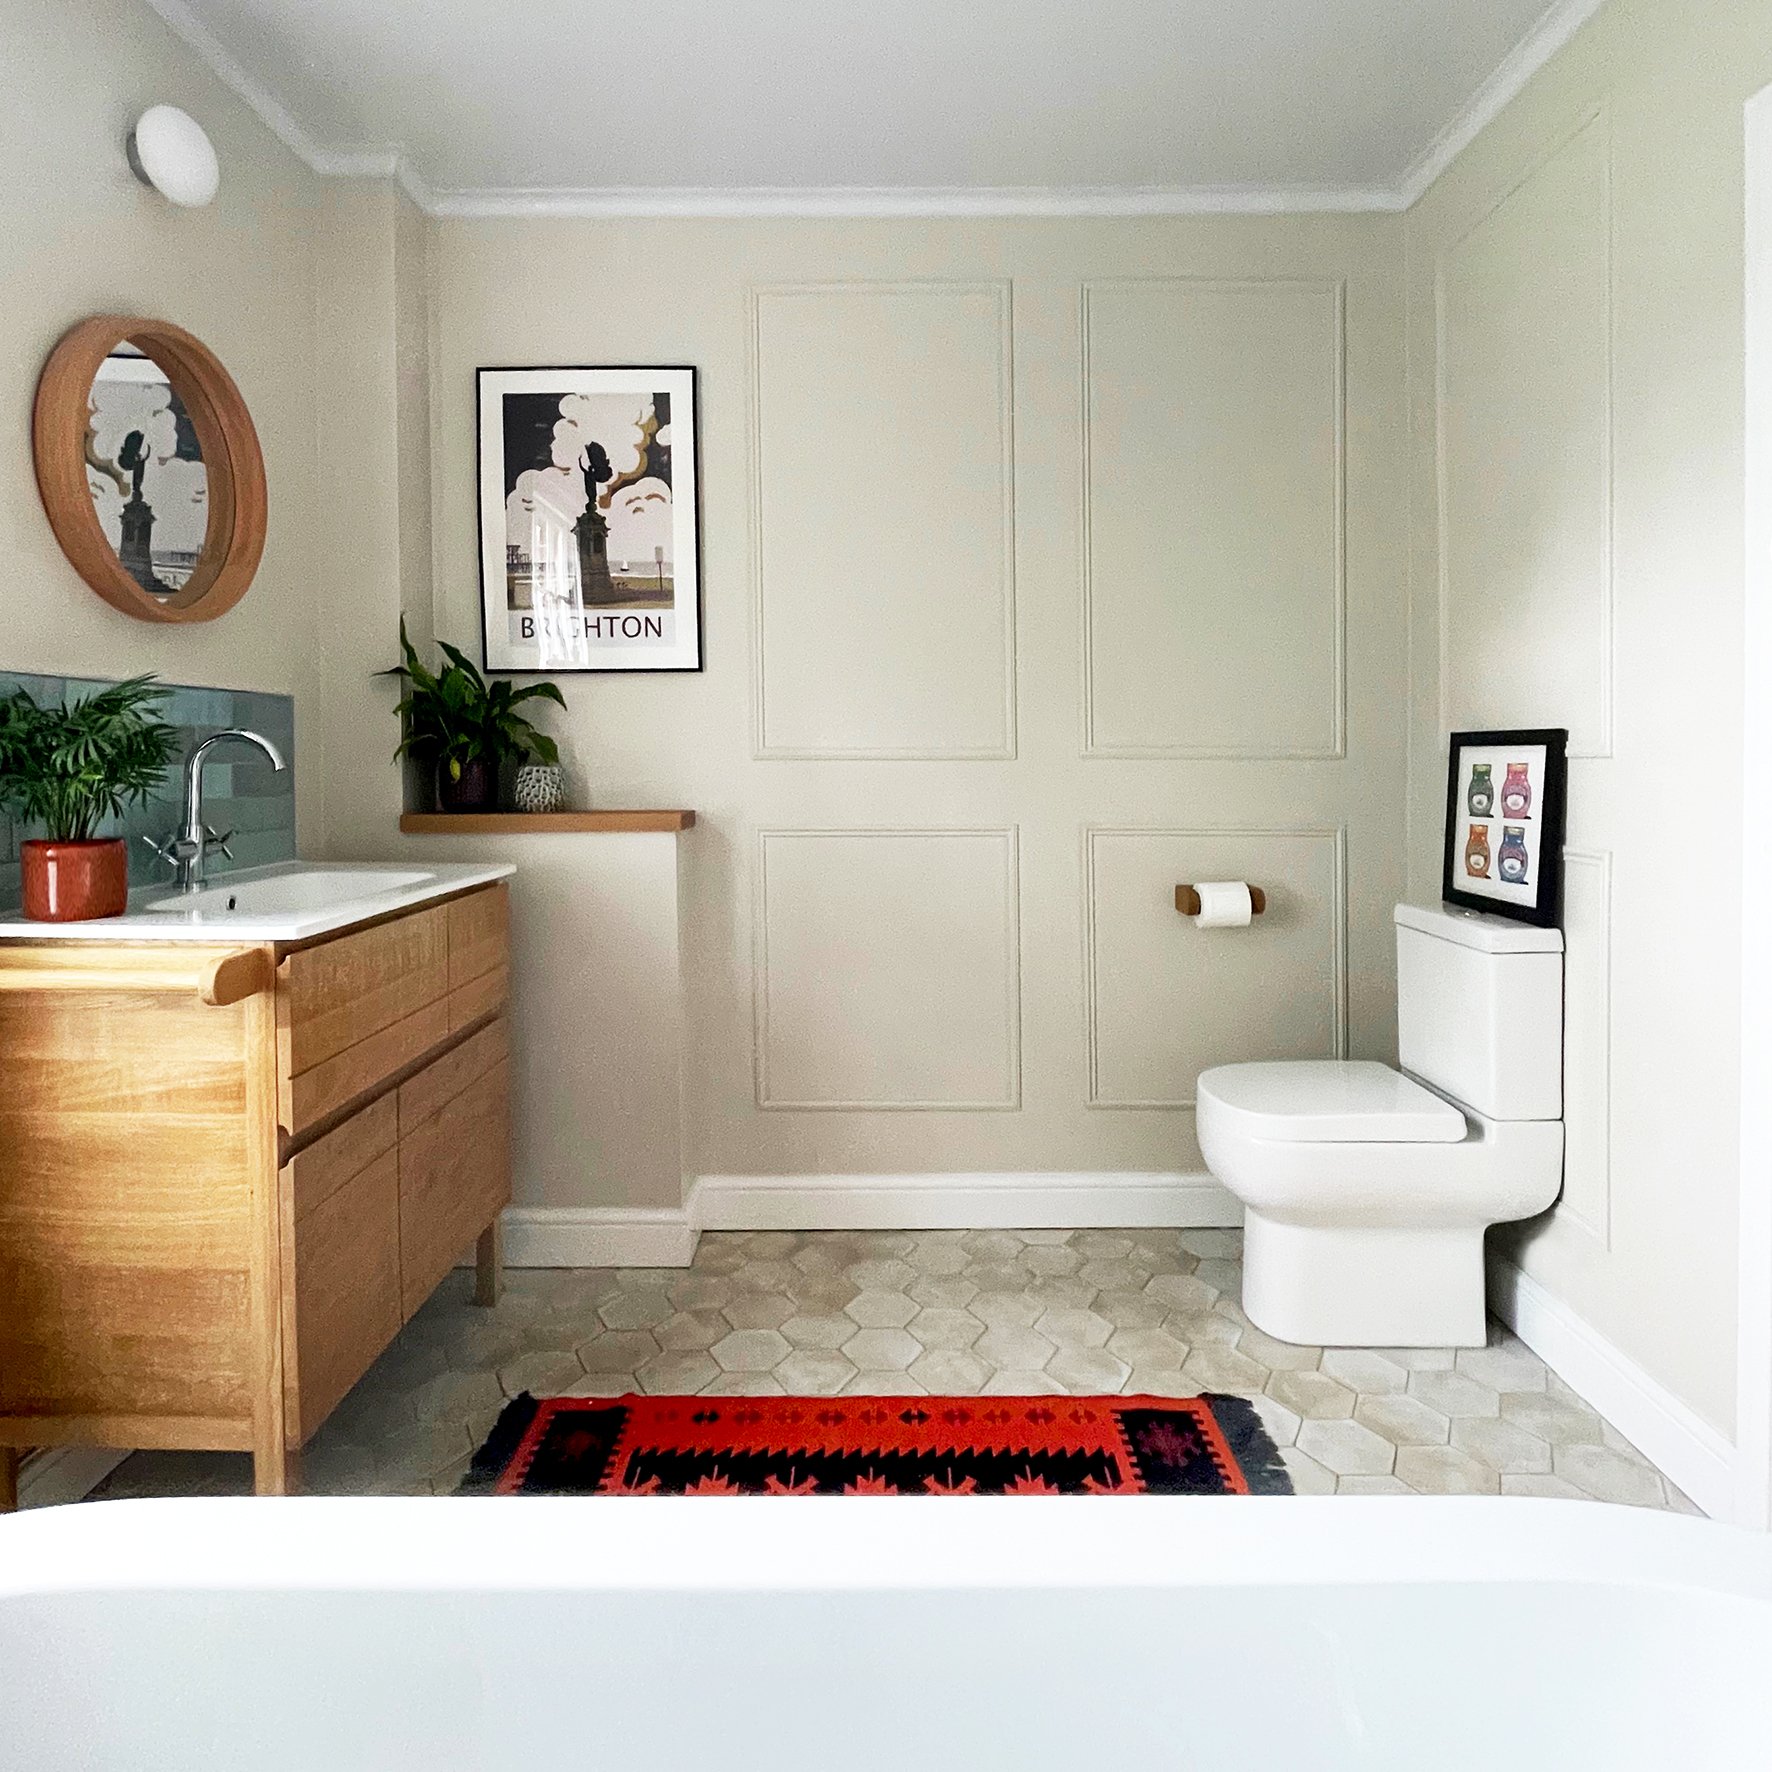 CharlotteBucciero-Interiors-Bathroom-cream-panneling-bespoke-sink-cupboard-blue-splashback.jpg